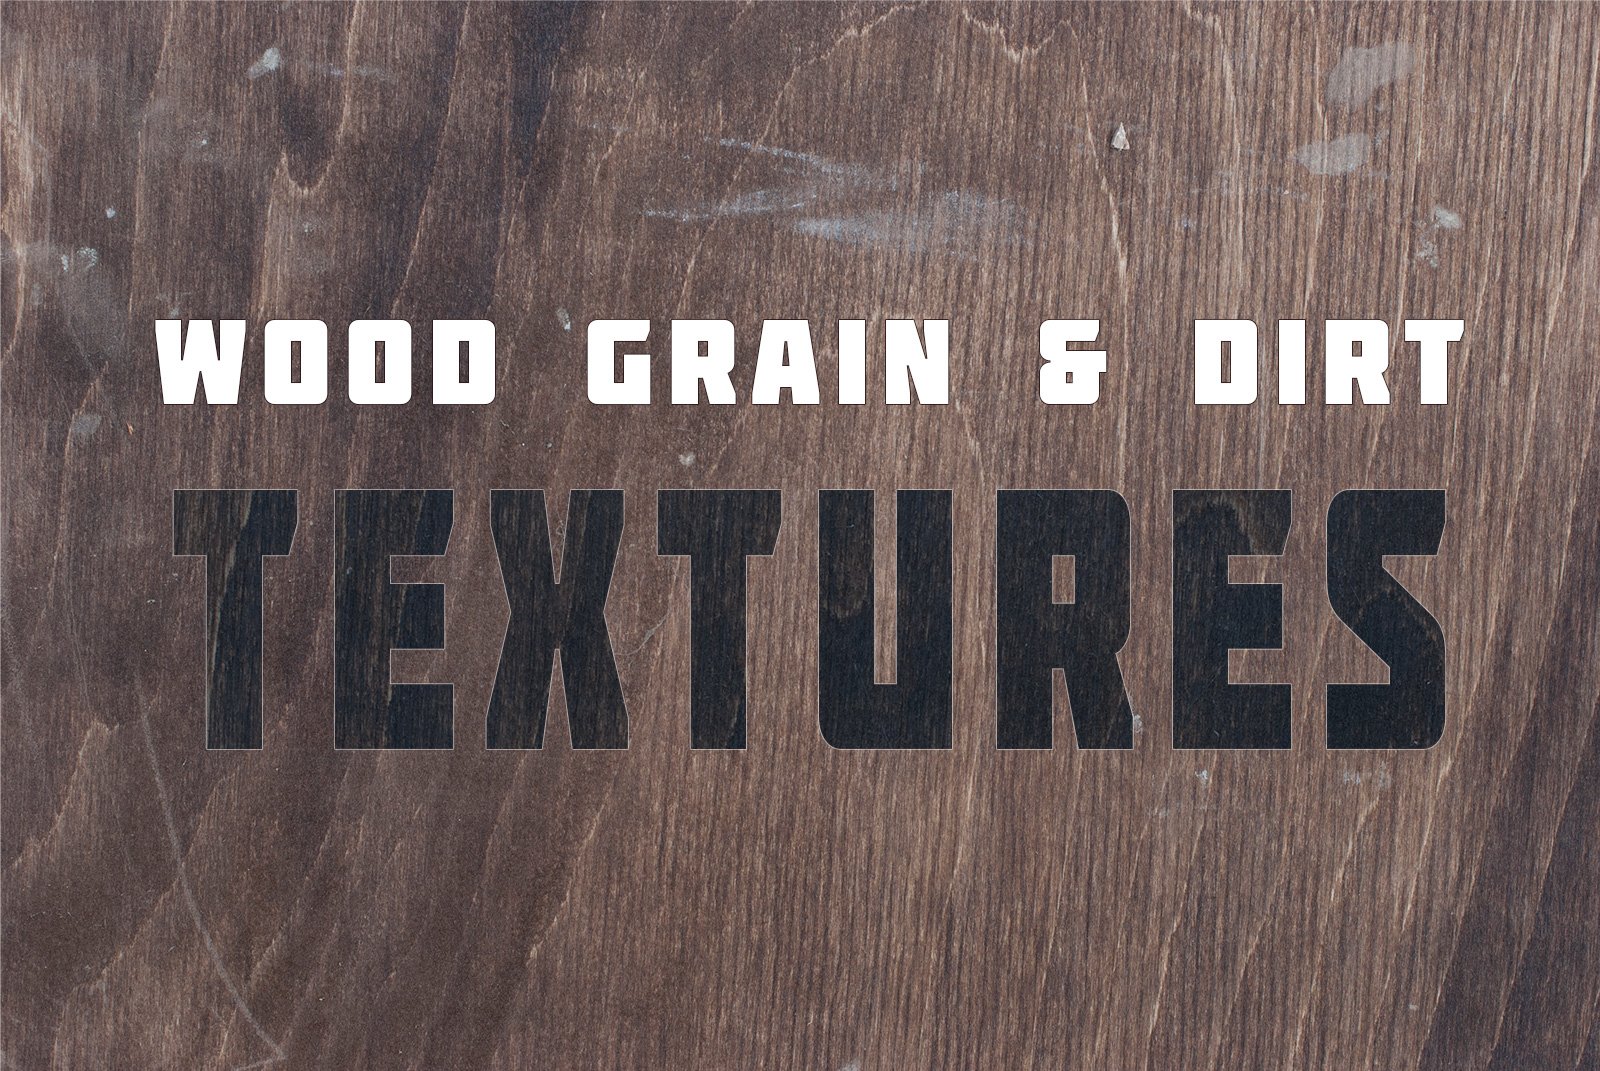 Wood Grain & Dirt Textures cover image.